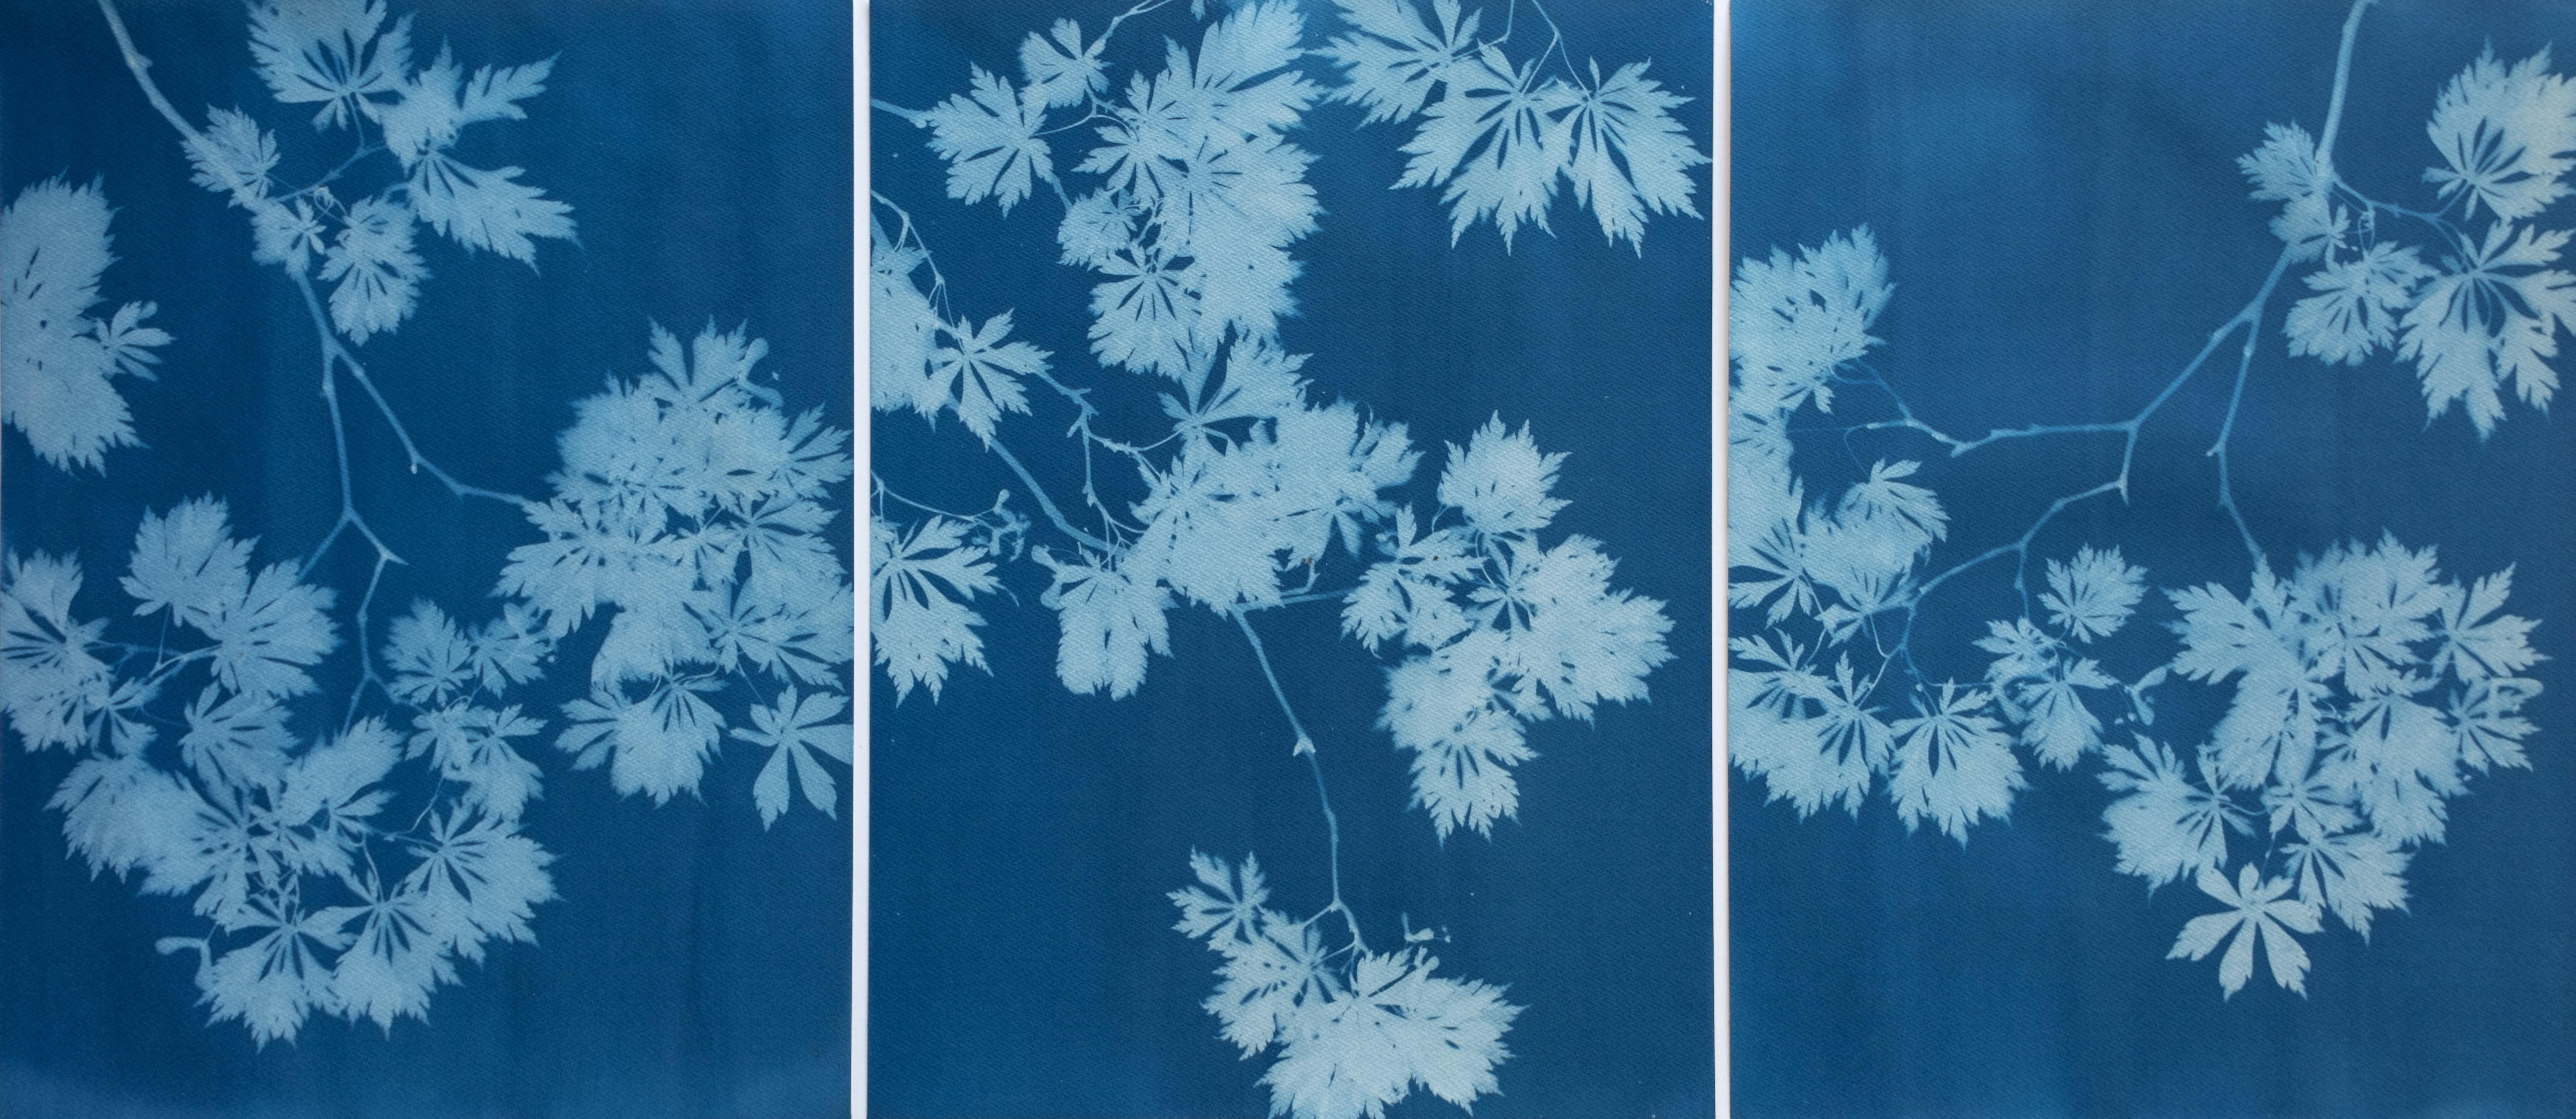 Christine So Landscape Photograph - Indigo Maple Triptych (3 hand-printed botanical cyanotypes, 24 x 18 in. each)